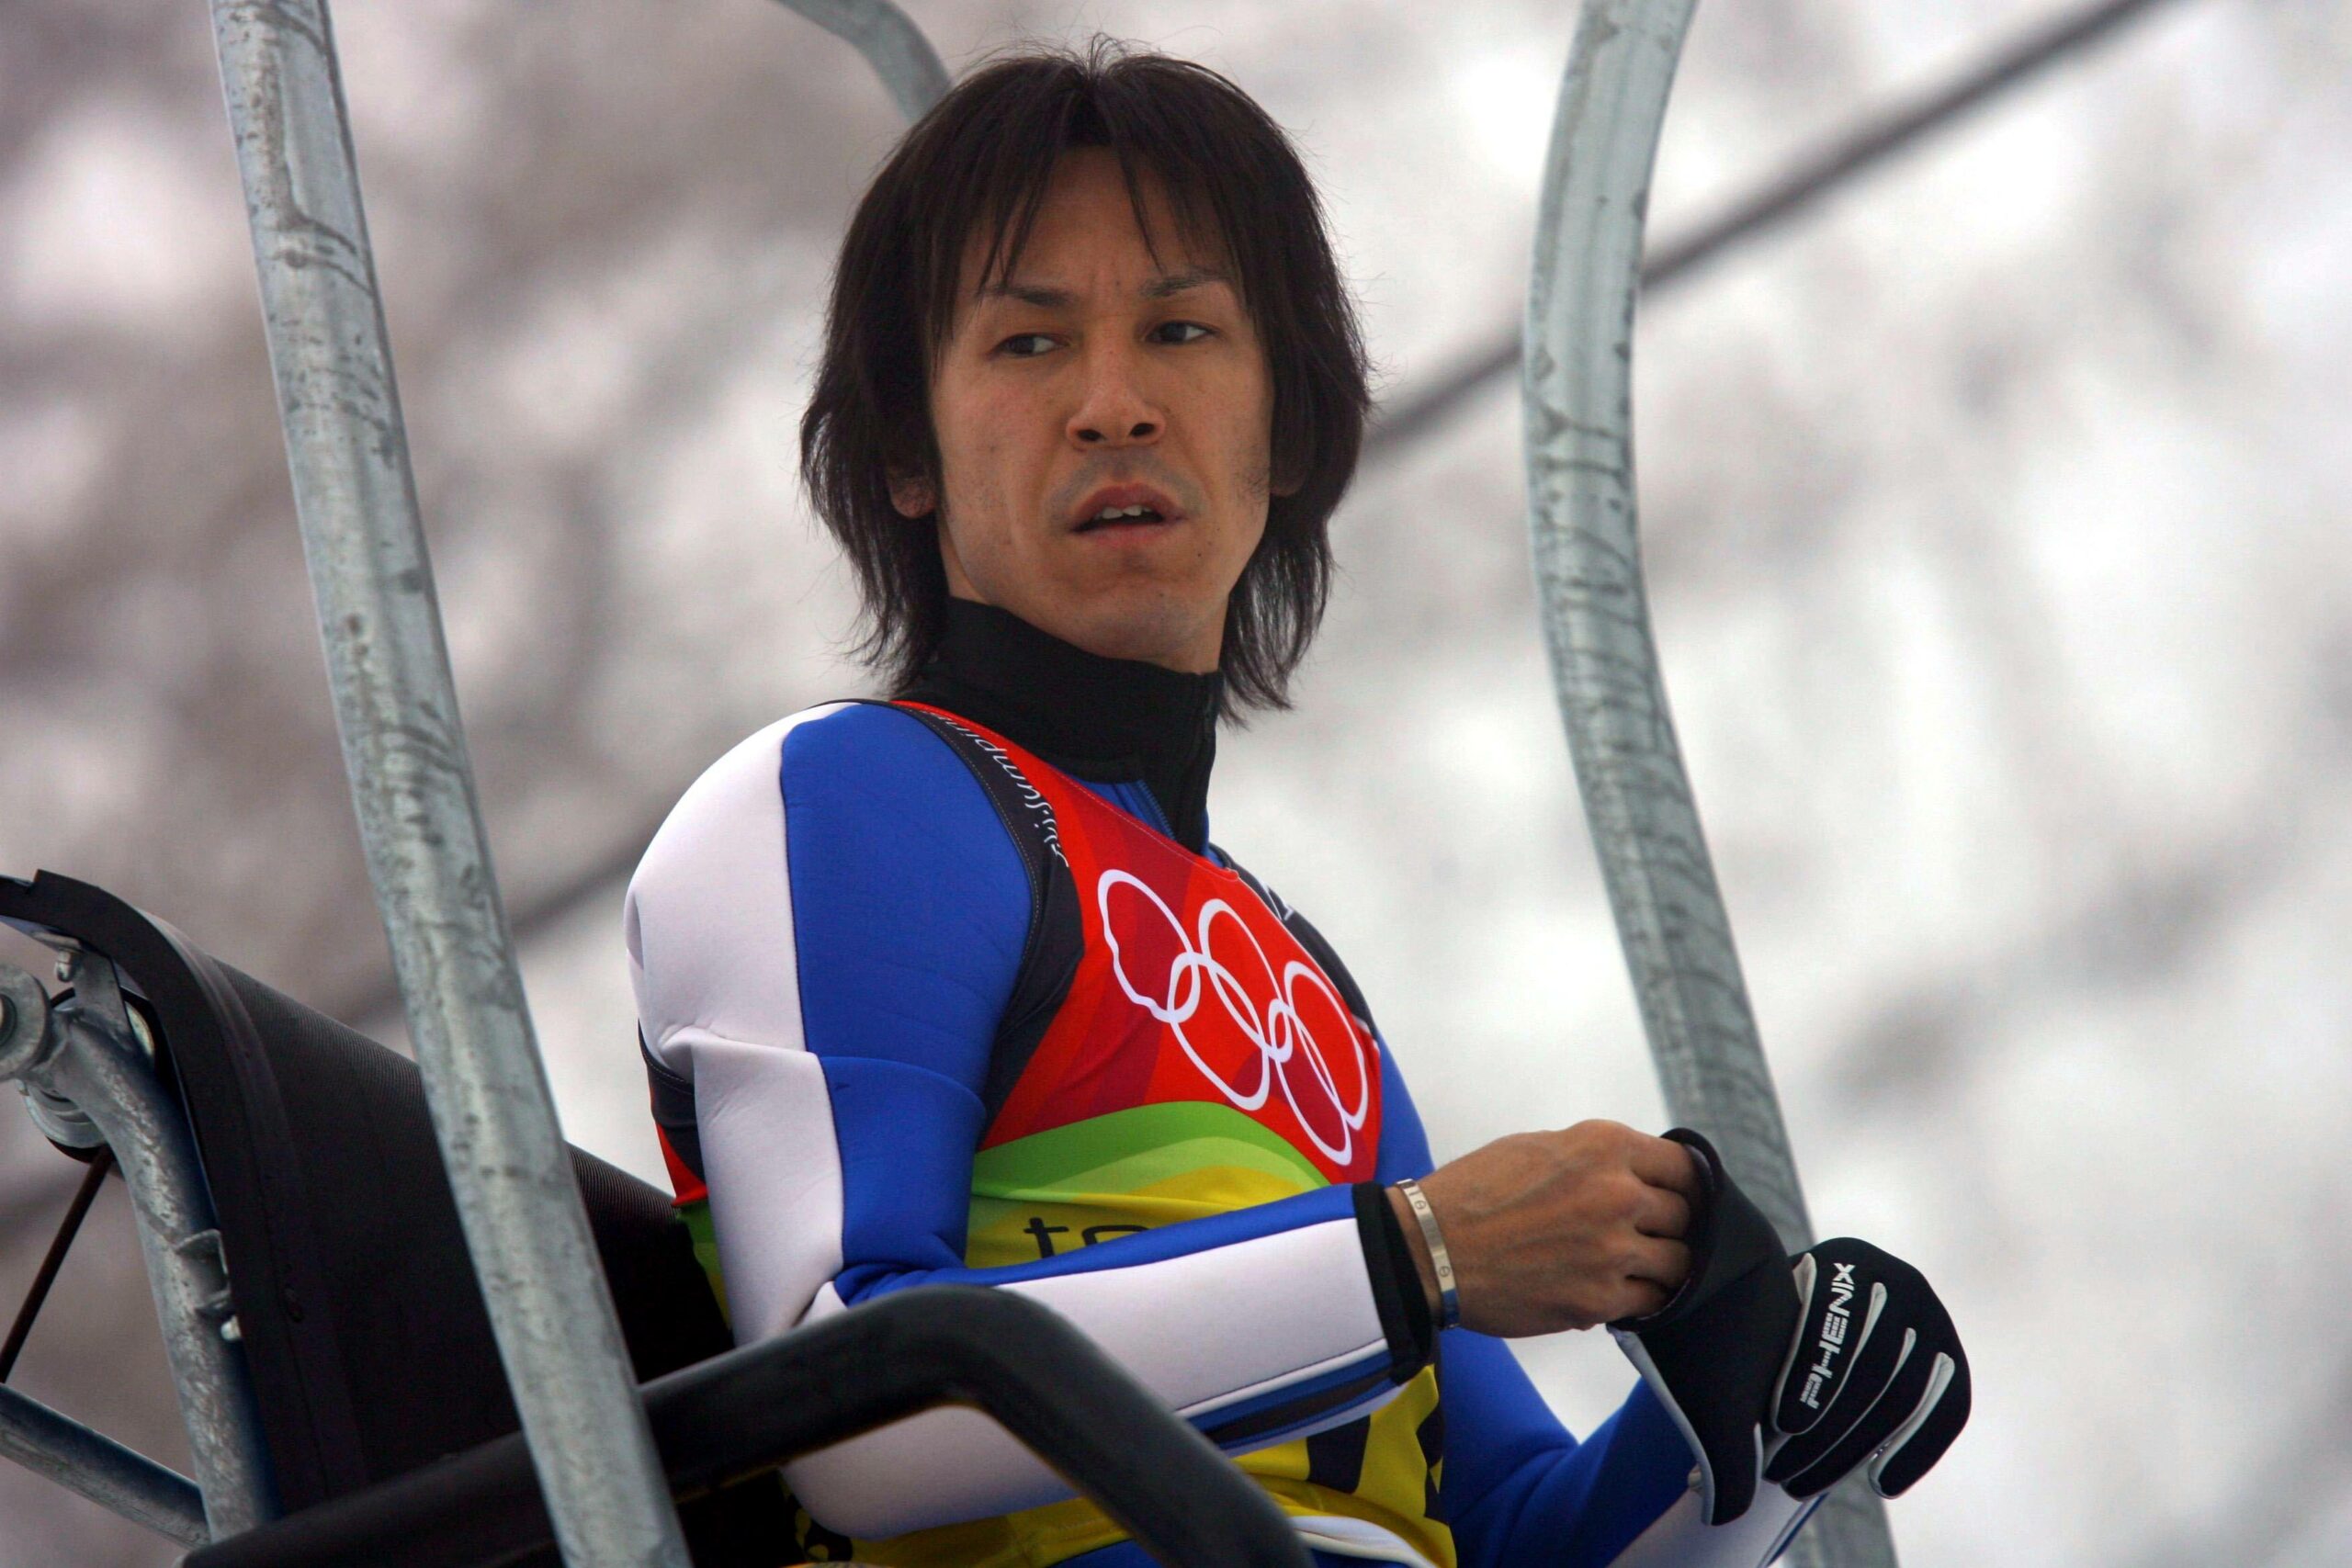 Noriaki Kasai sitzt ohne Helm im Skilift.